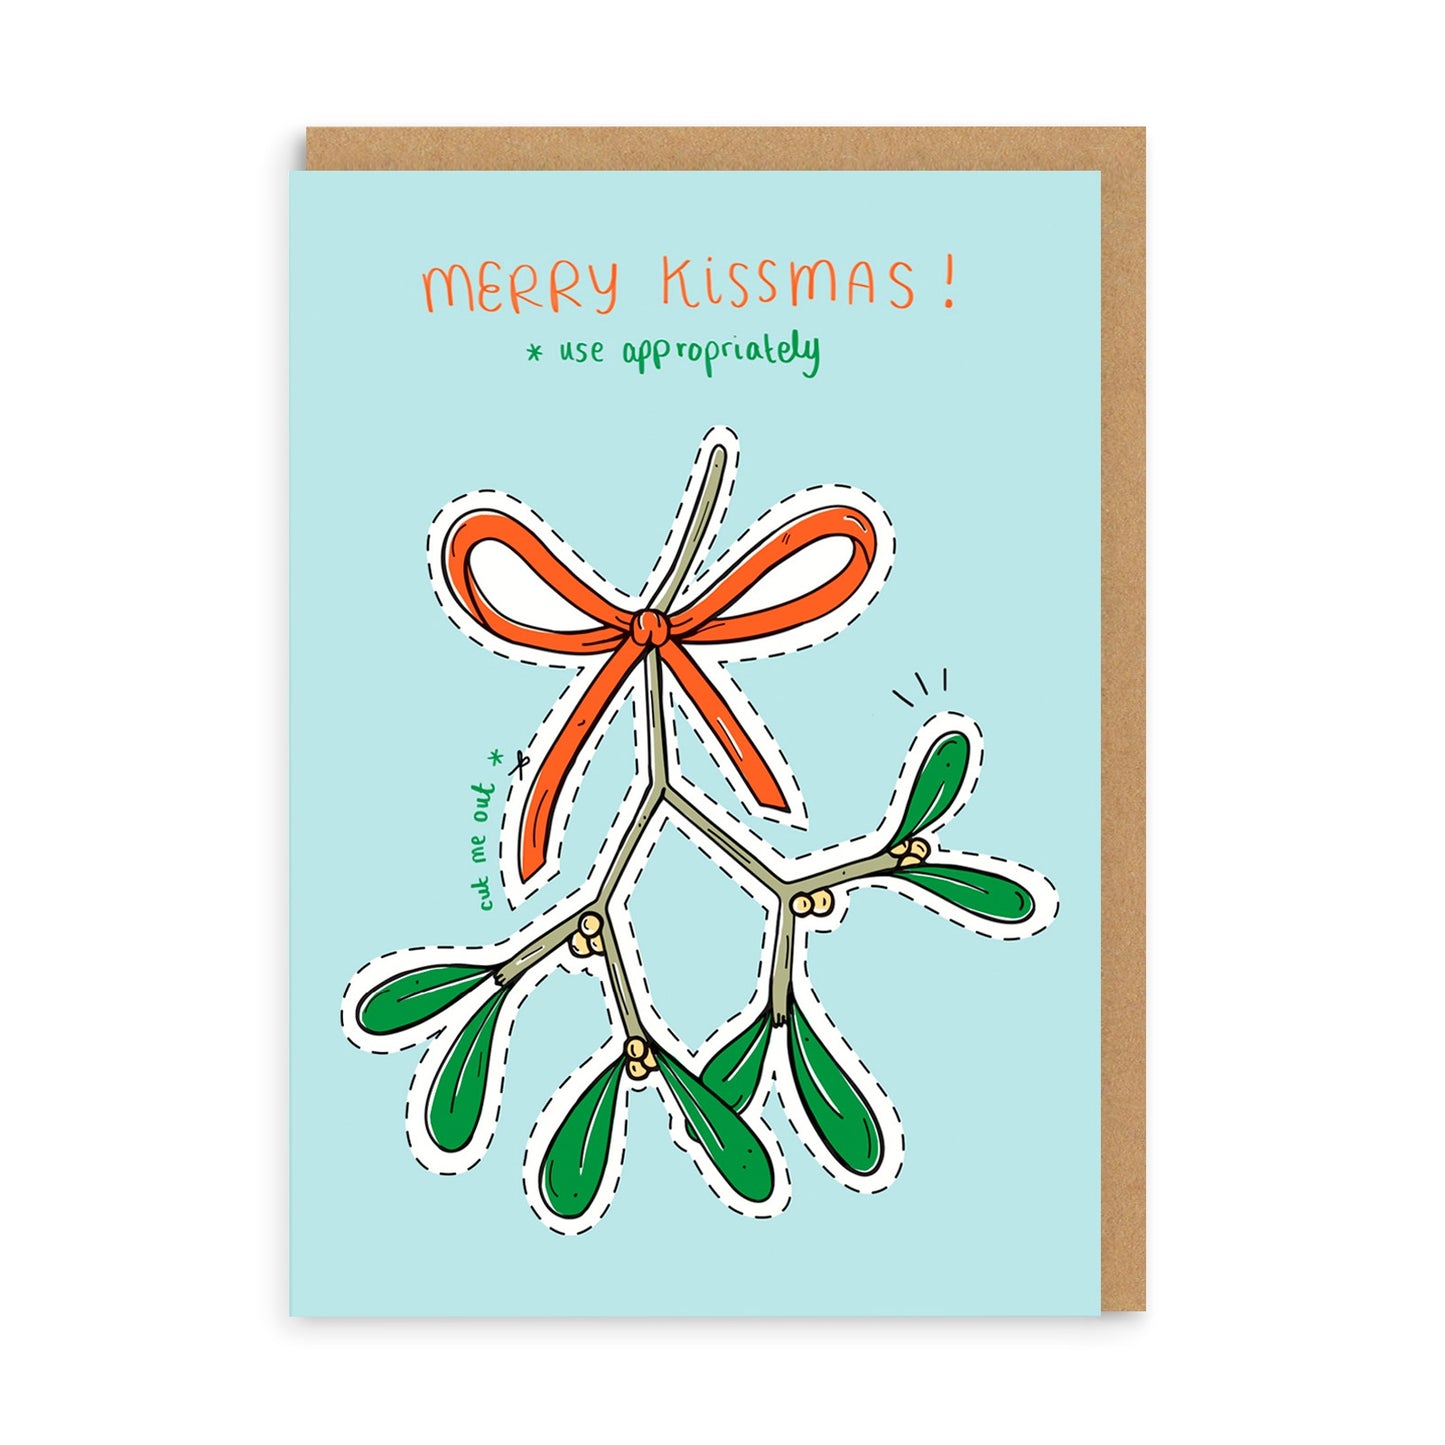 Merry Kissmas Greeting Card